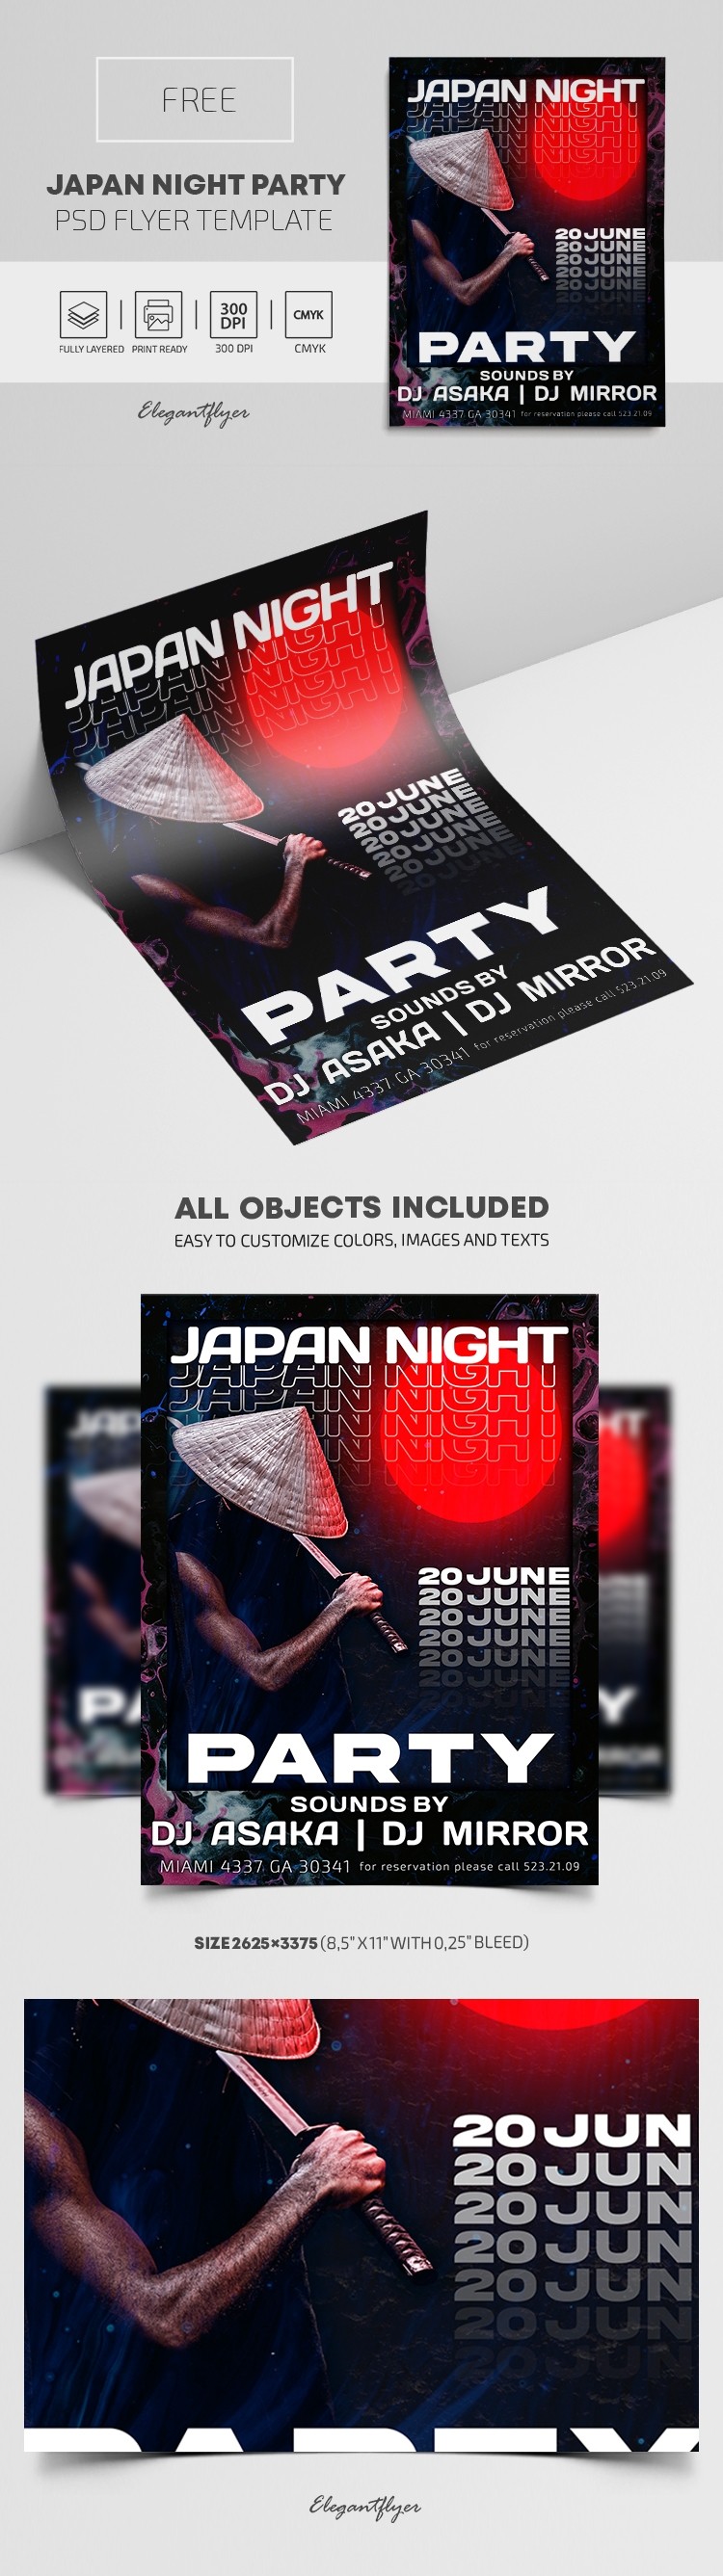 Japan Night Party Flyer by ElegantFlyer